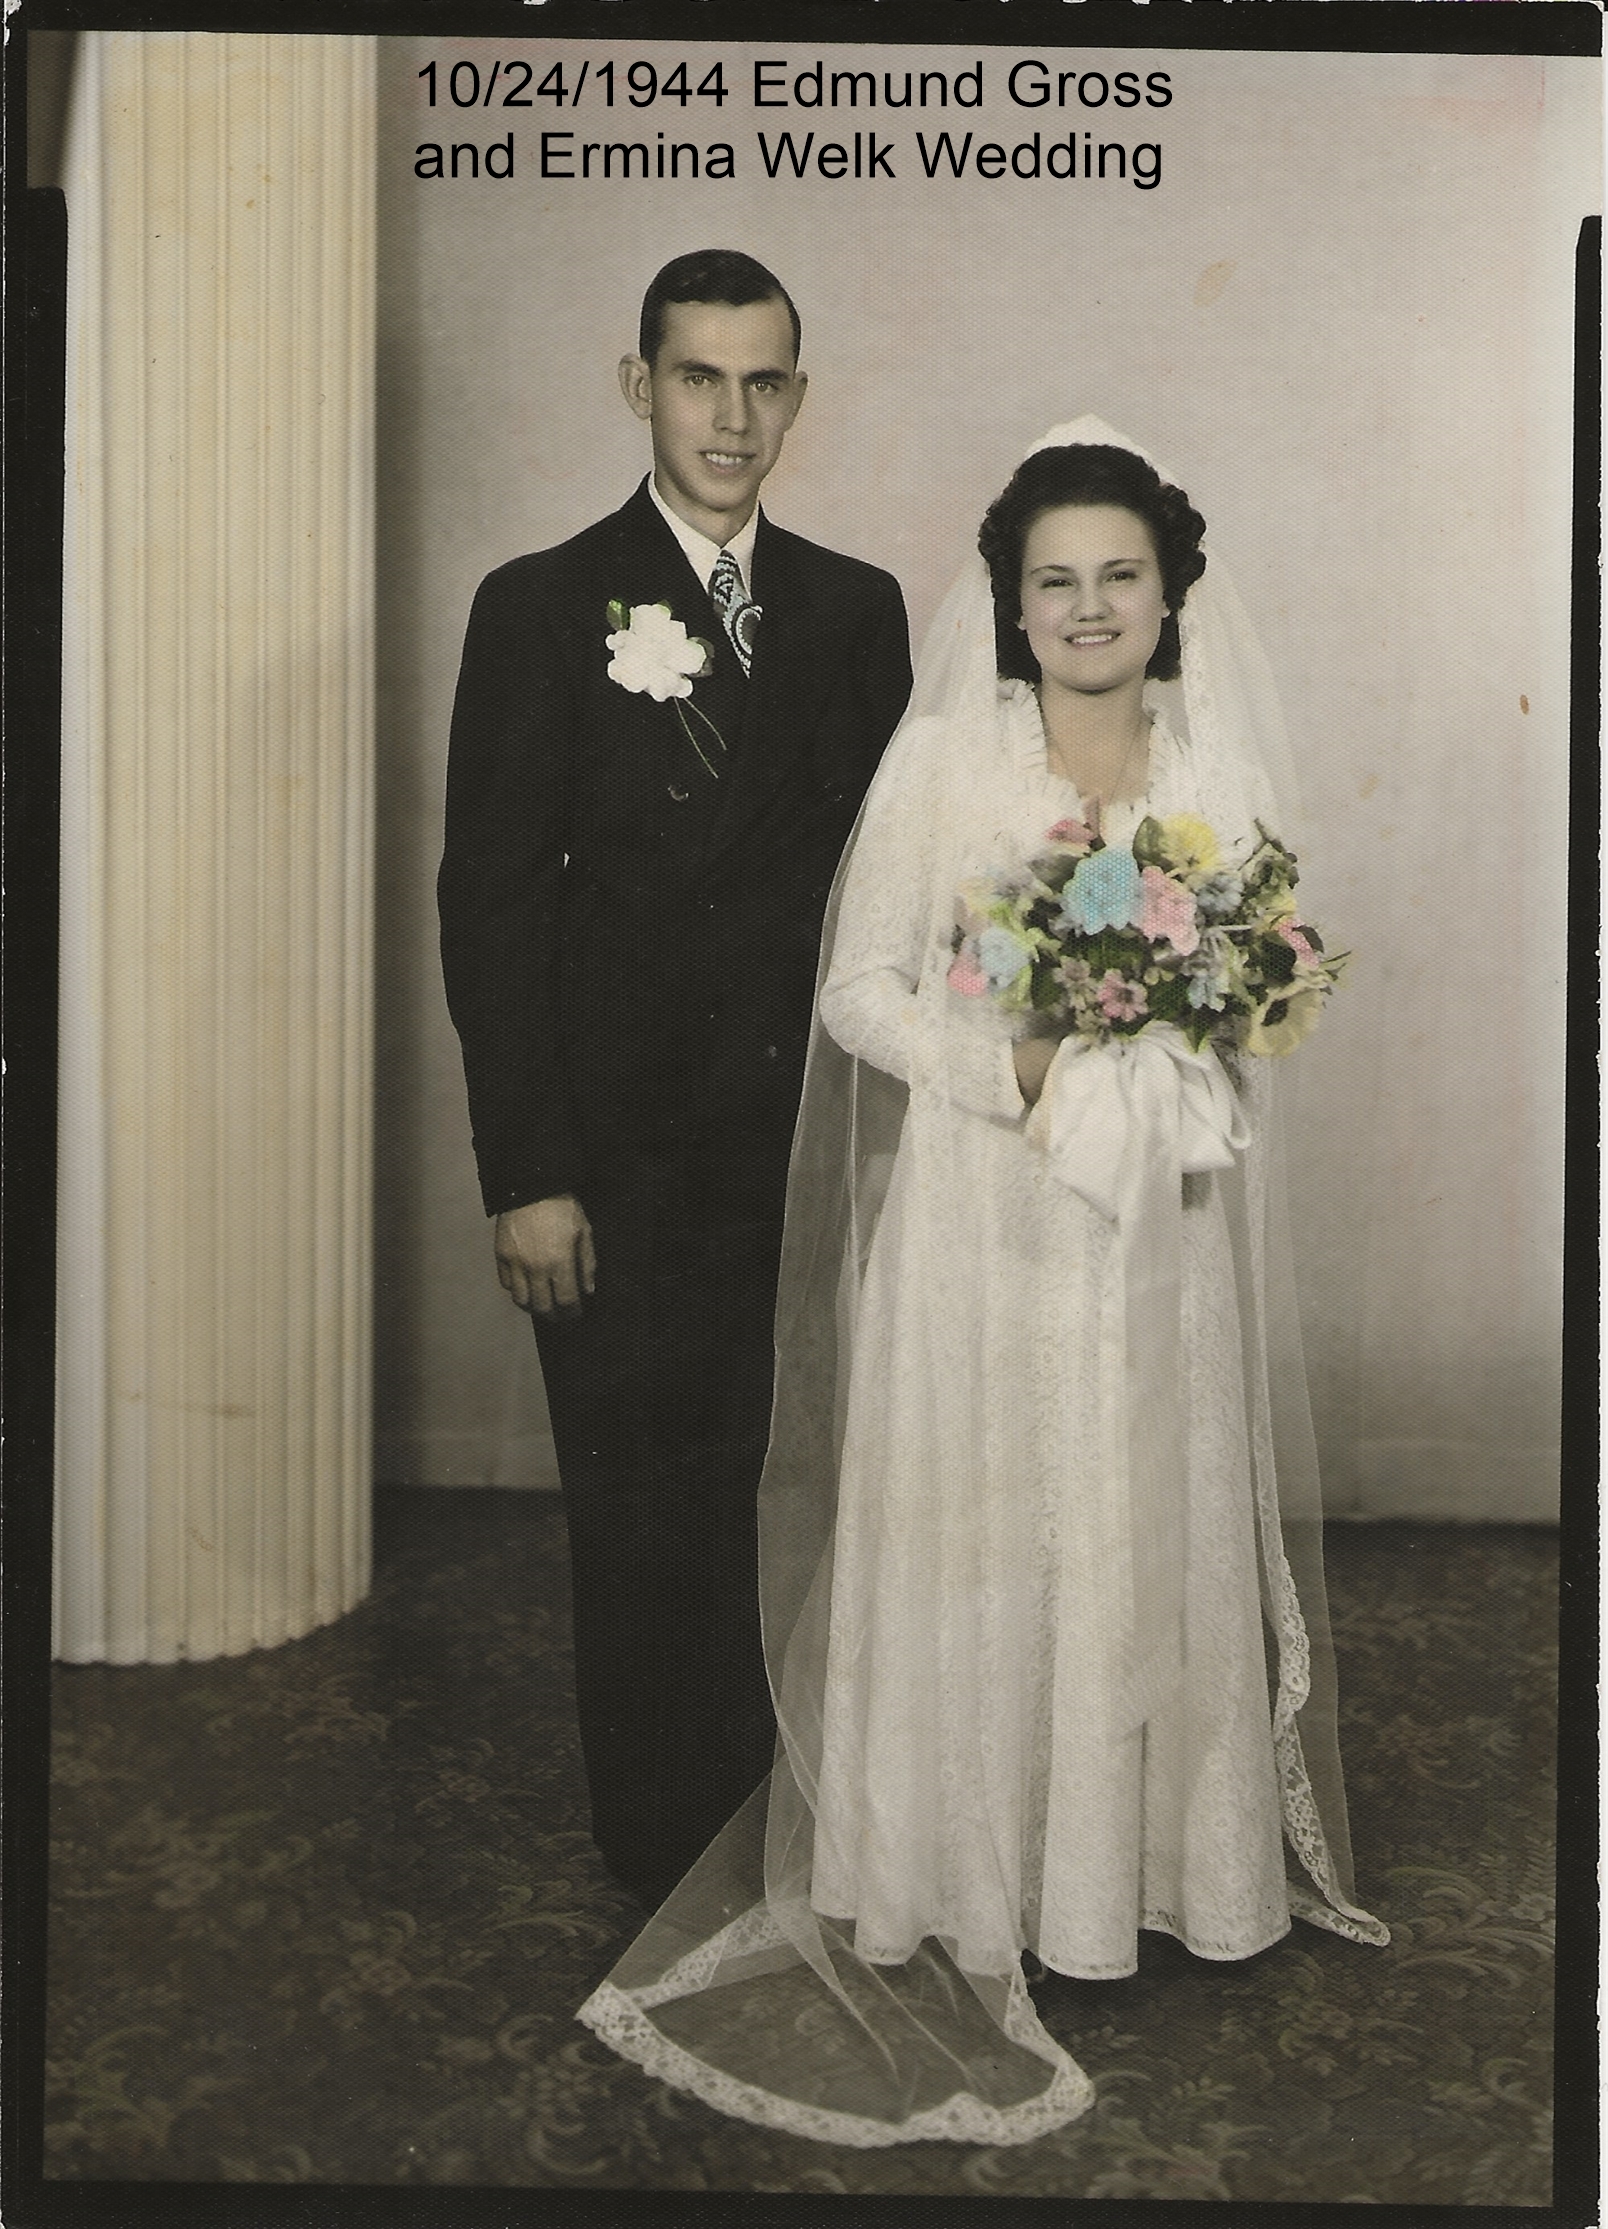 Edmund and Ermina Wedding, October 24, 1944.